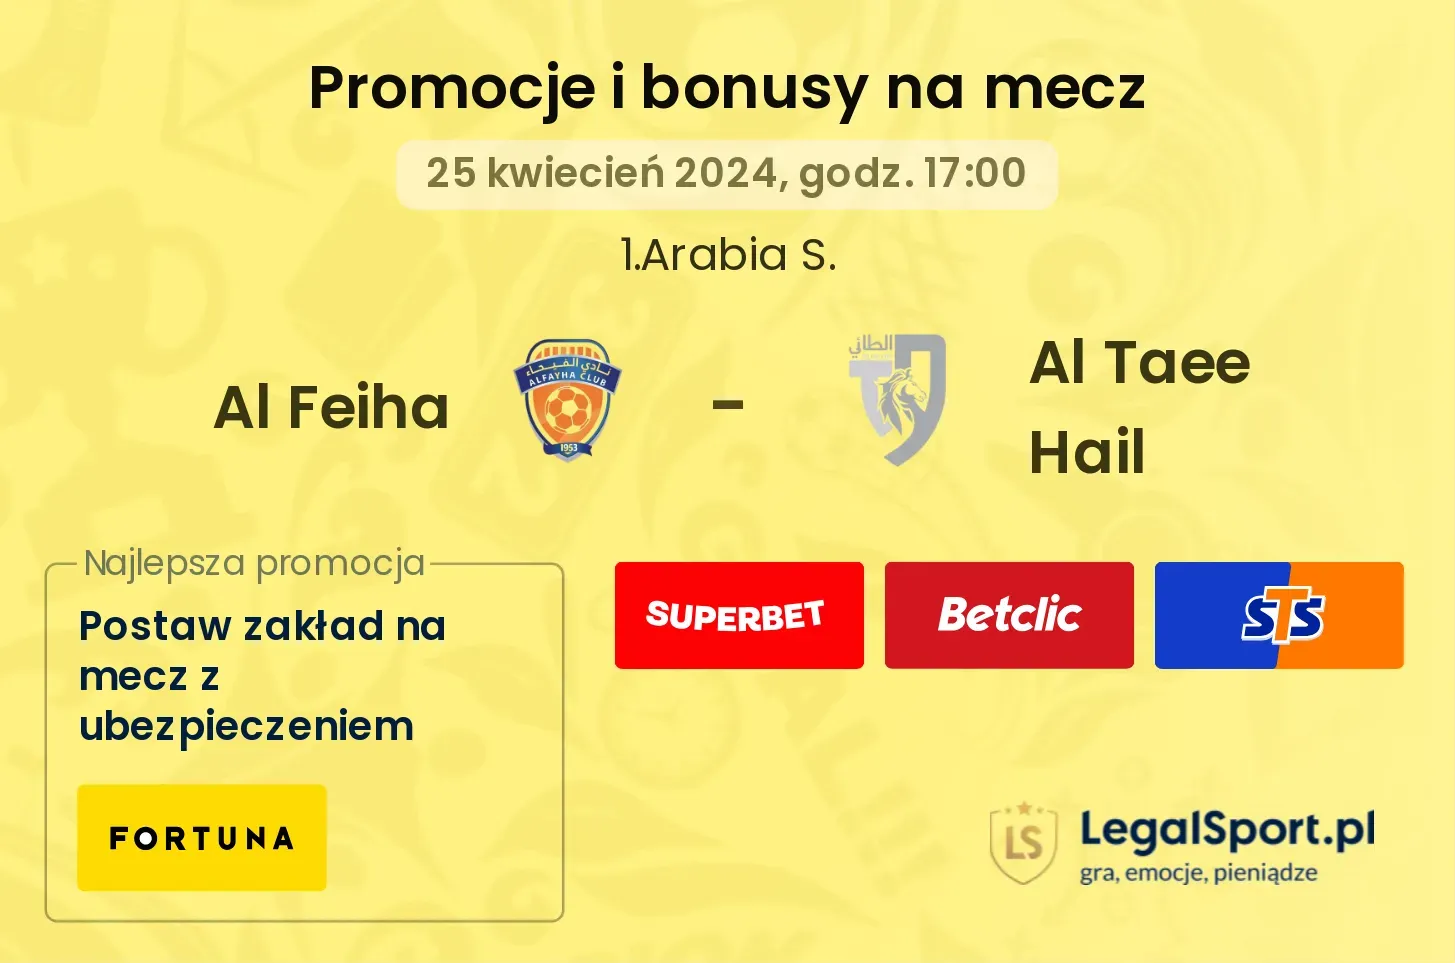 Al Feiha - Al Taee Hail promocje bonusy na mecz